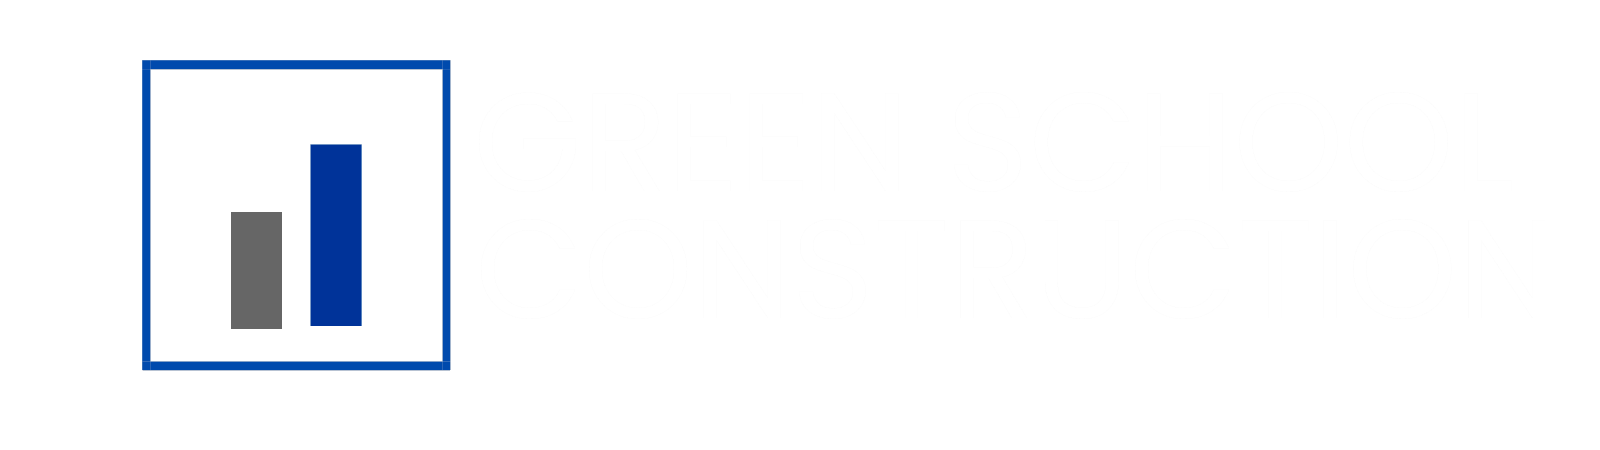 Green School Construction